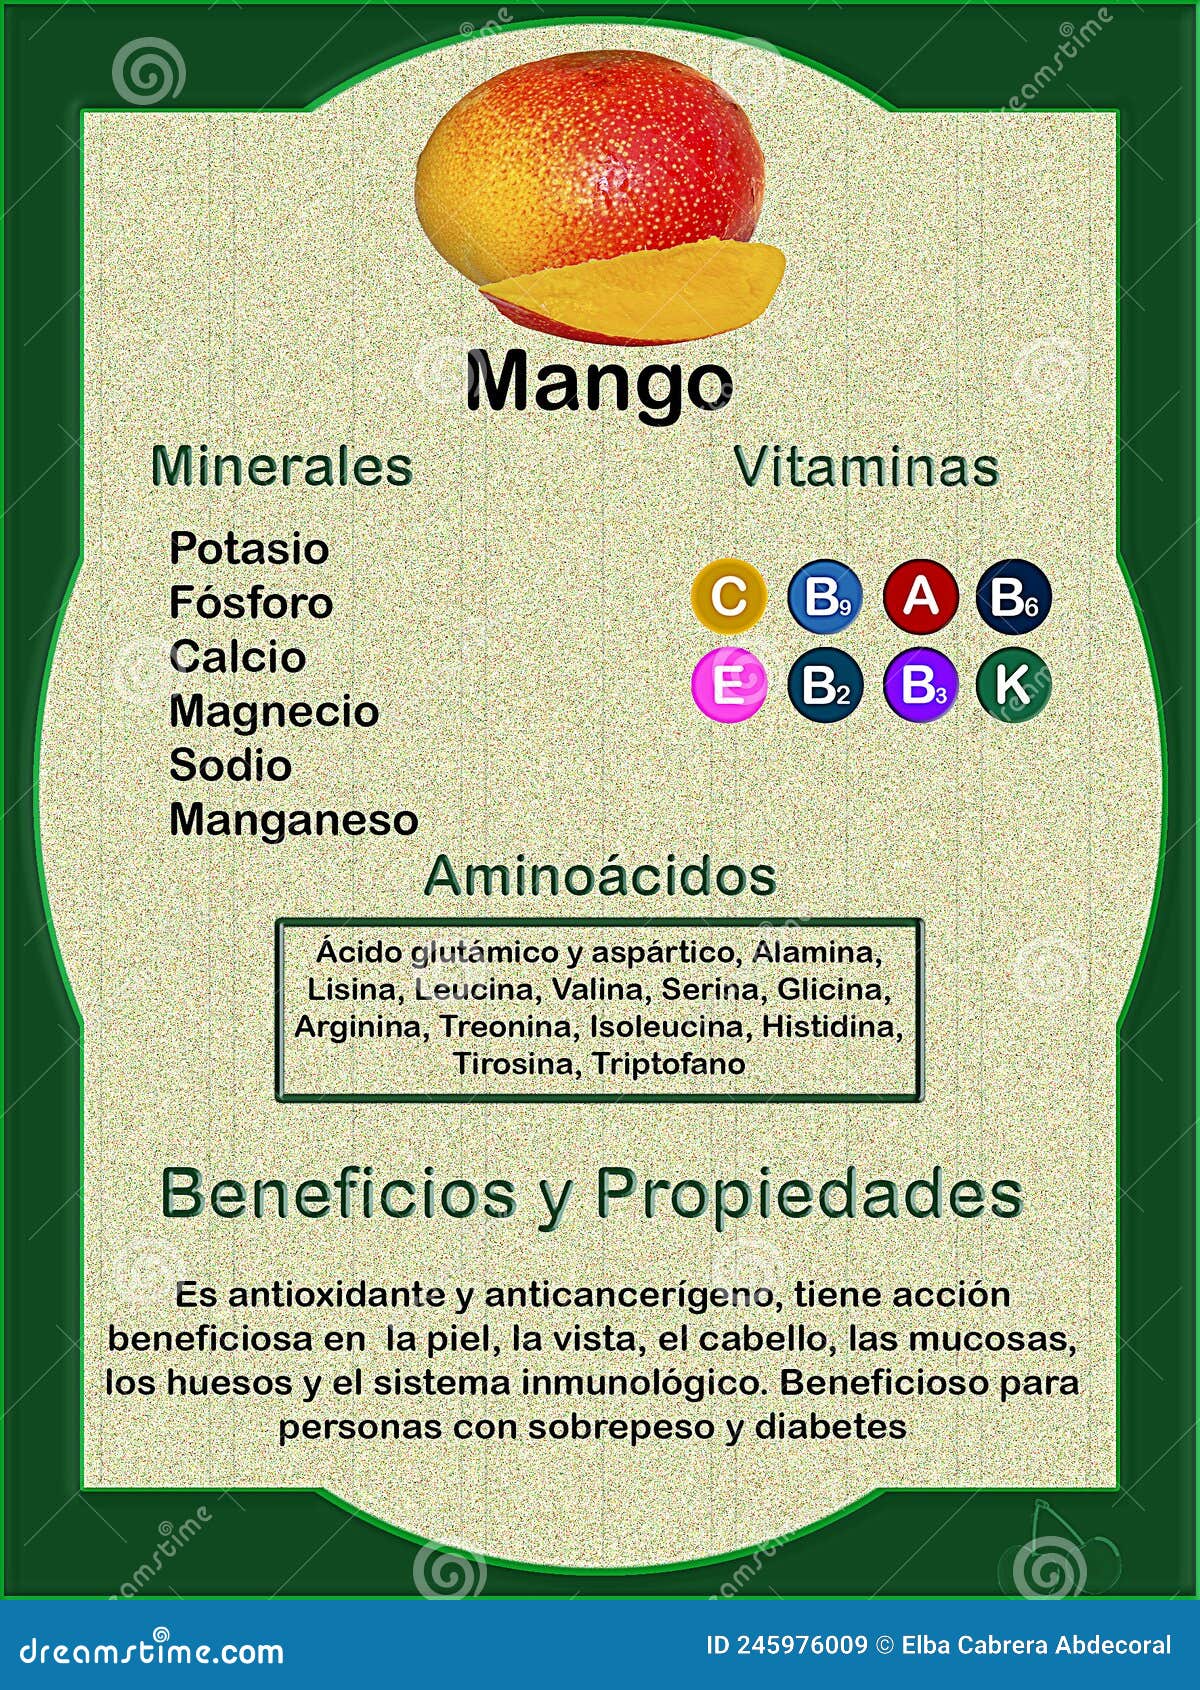 mango fruit infographic label health benefits